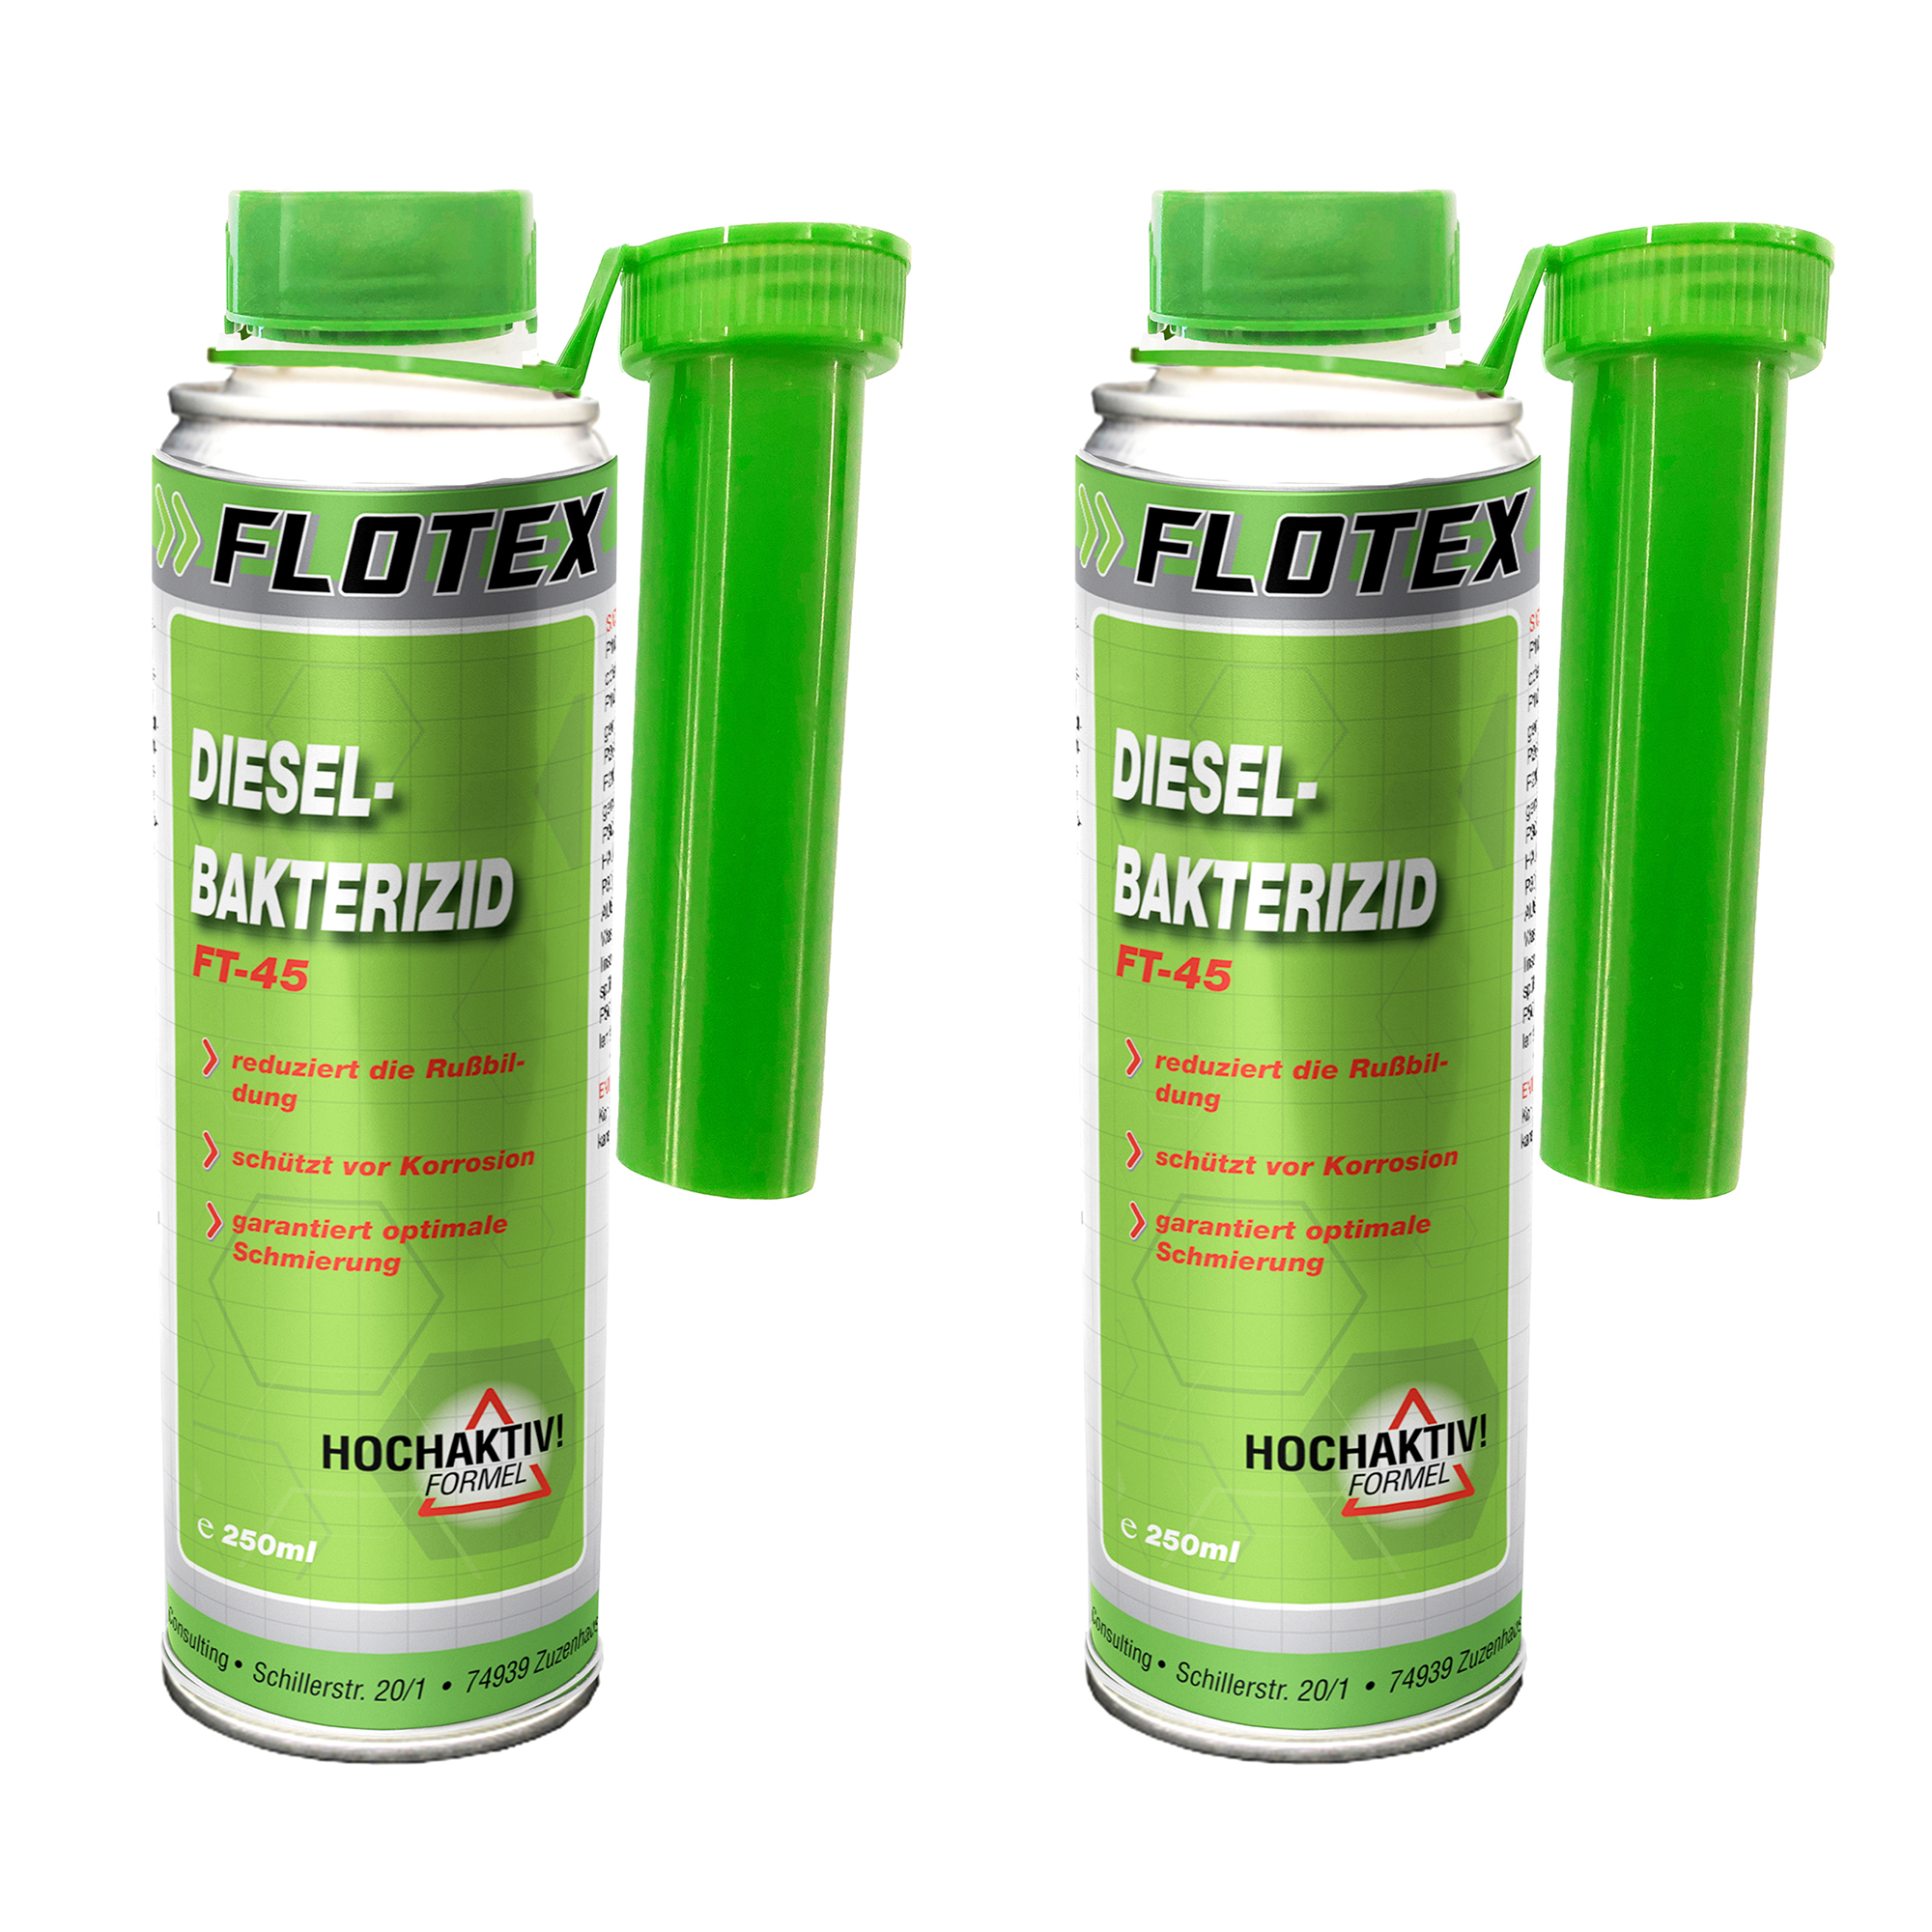 Flotex Diesel Bakterizid, 2 x 250ml Additiv